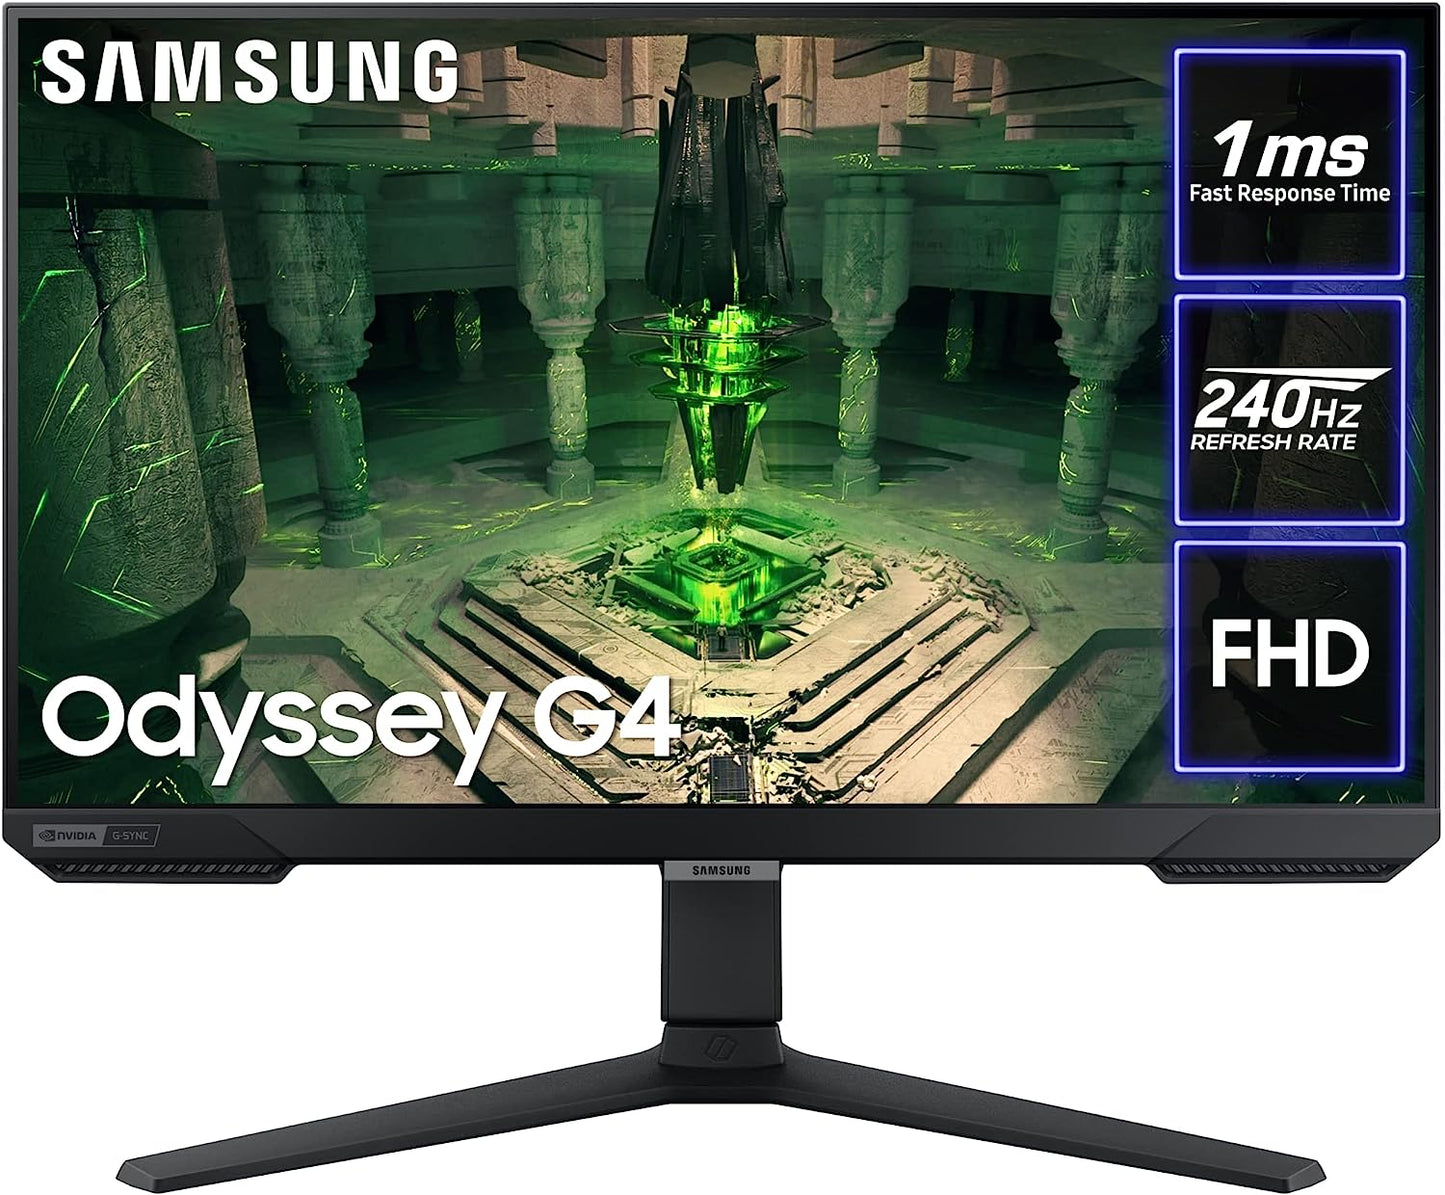 Samsung LS27BG400EEXXS 27 Odyssey G4 Gaming Monitor With 240Hz